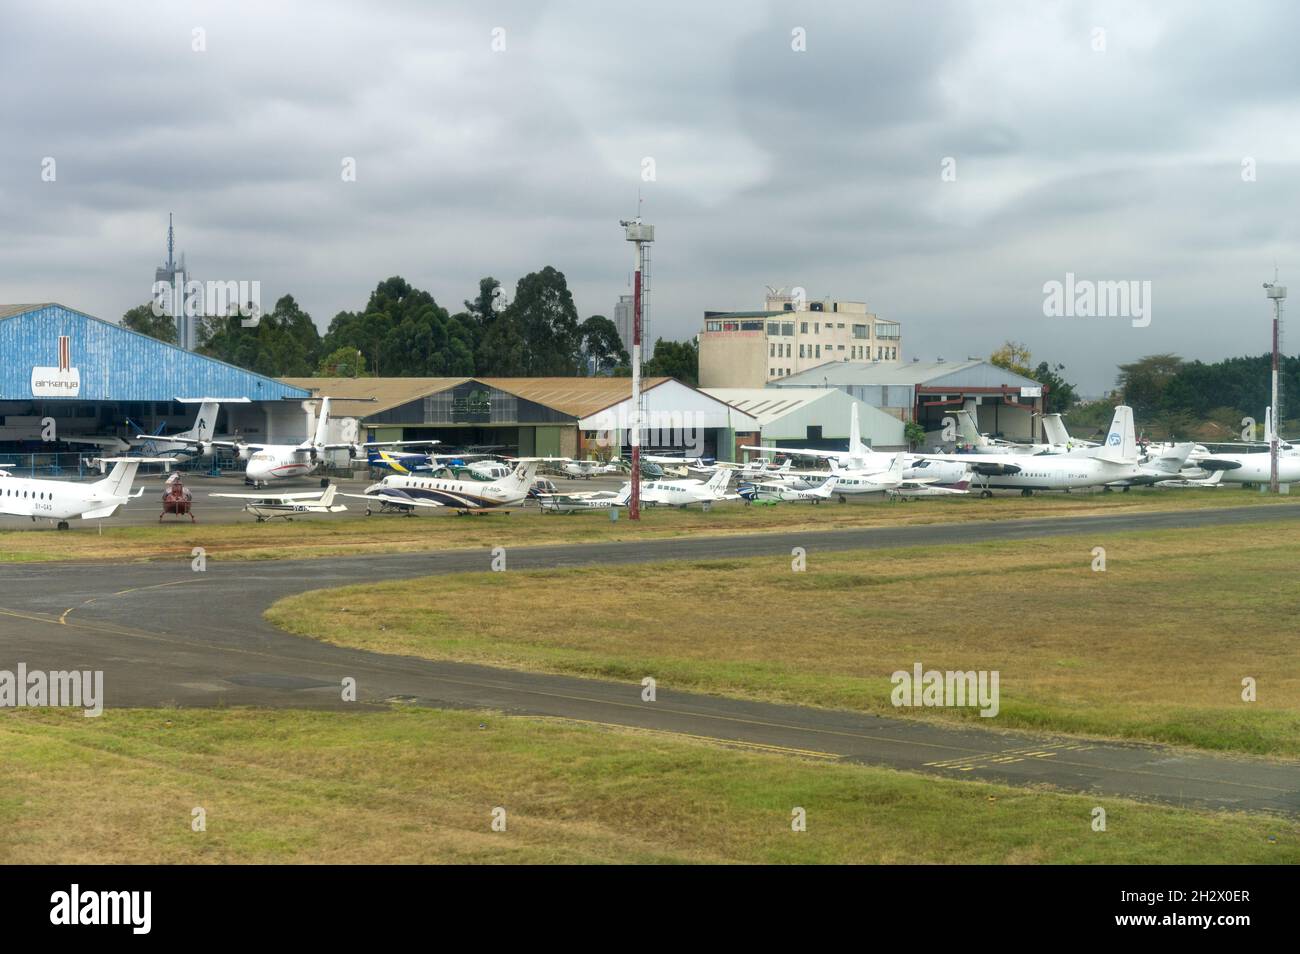 Wilson Airport apron with various aircraft, Nairobi, Kenya Stock Photo